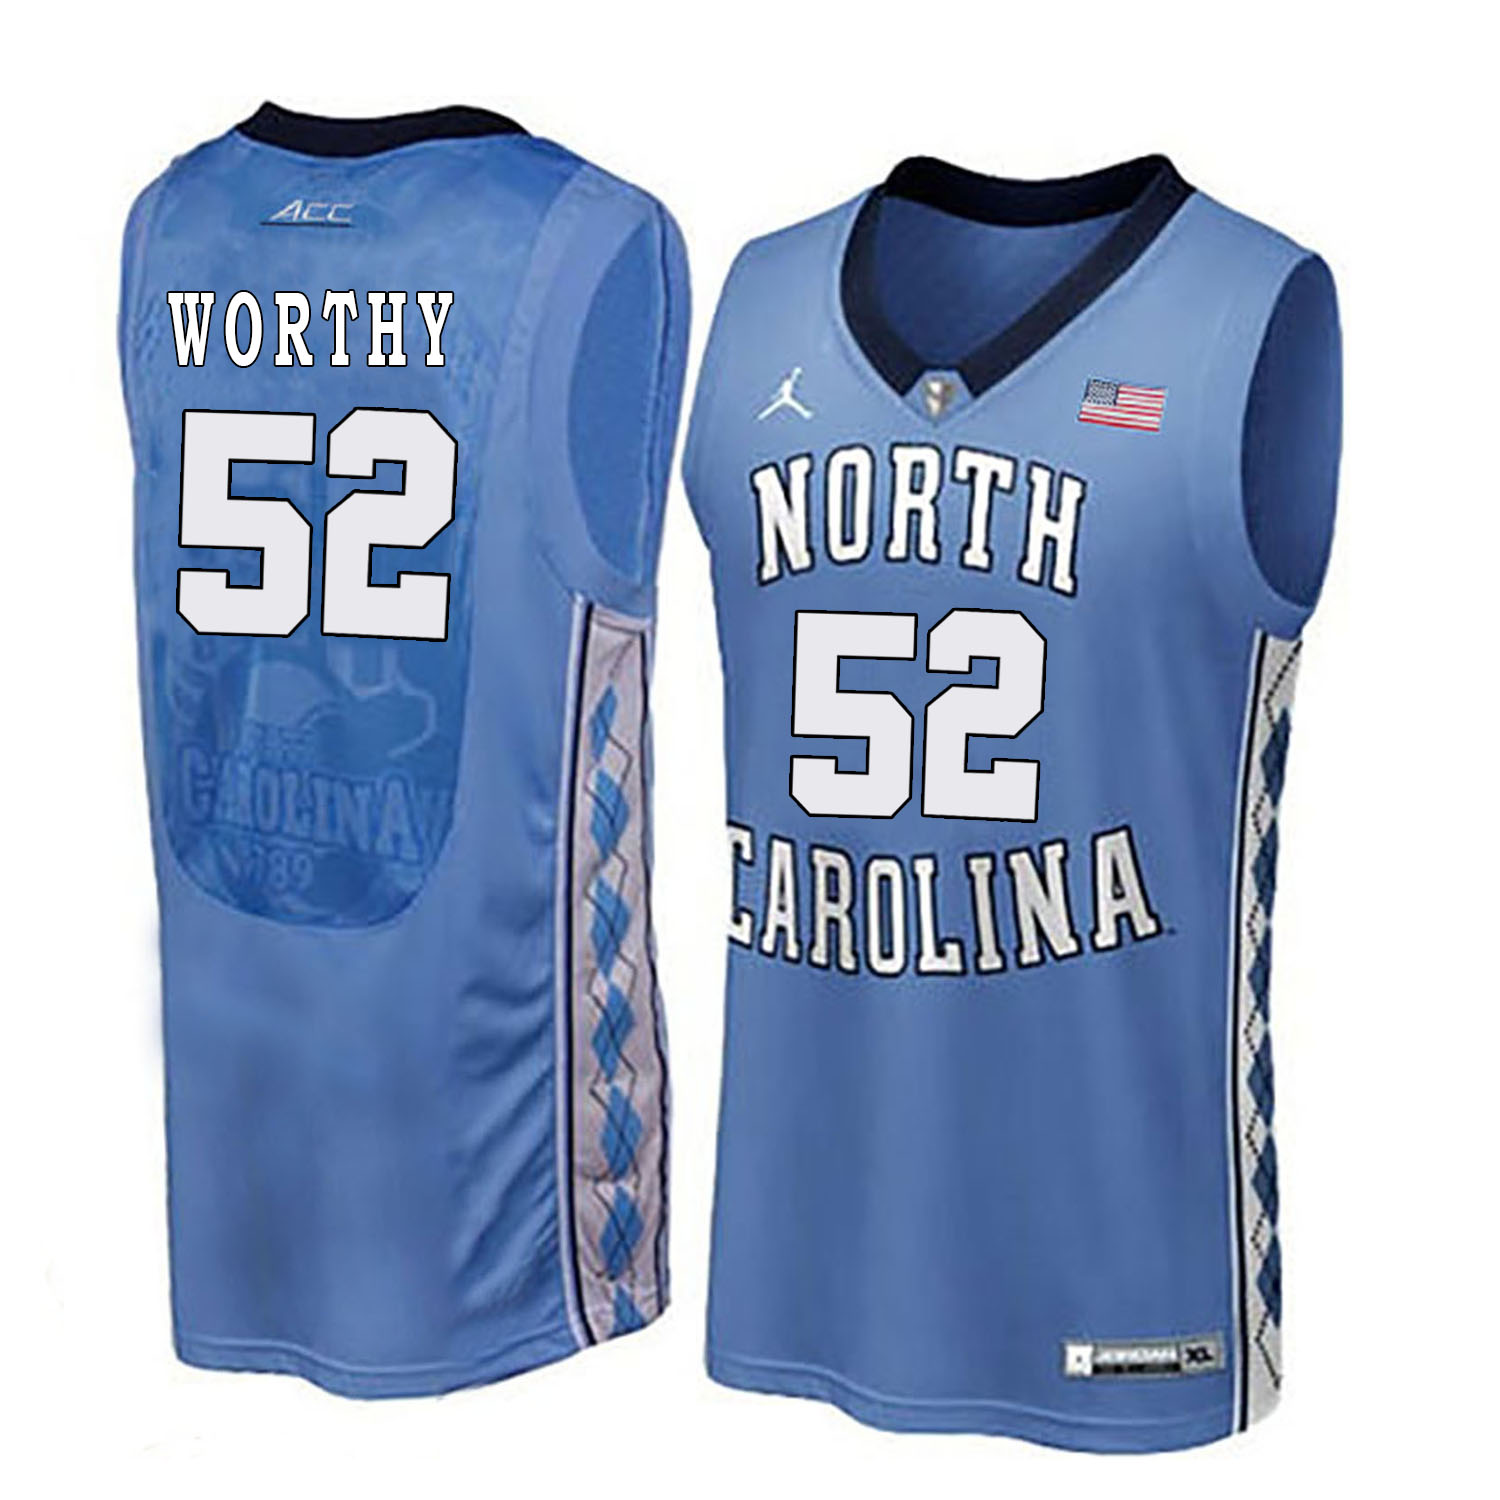 North Carolina Tar Heels 52 James Worthy Blue College Basketball Jersey